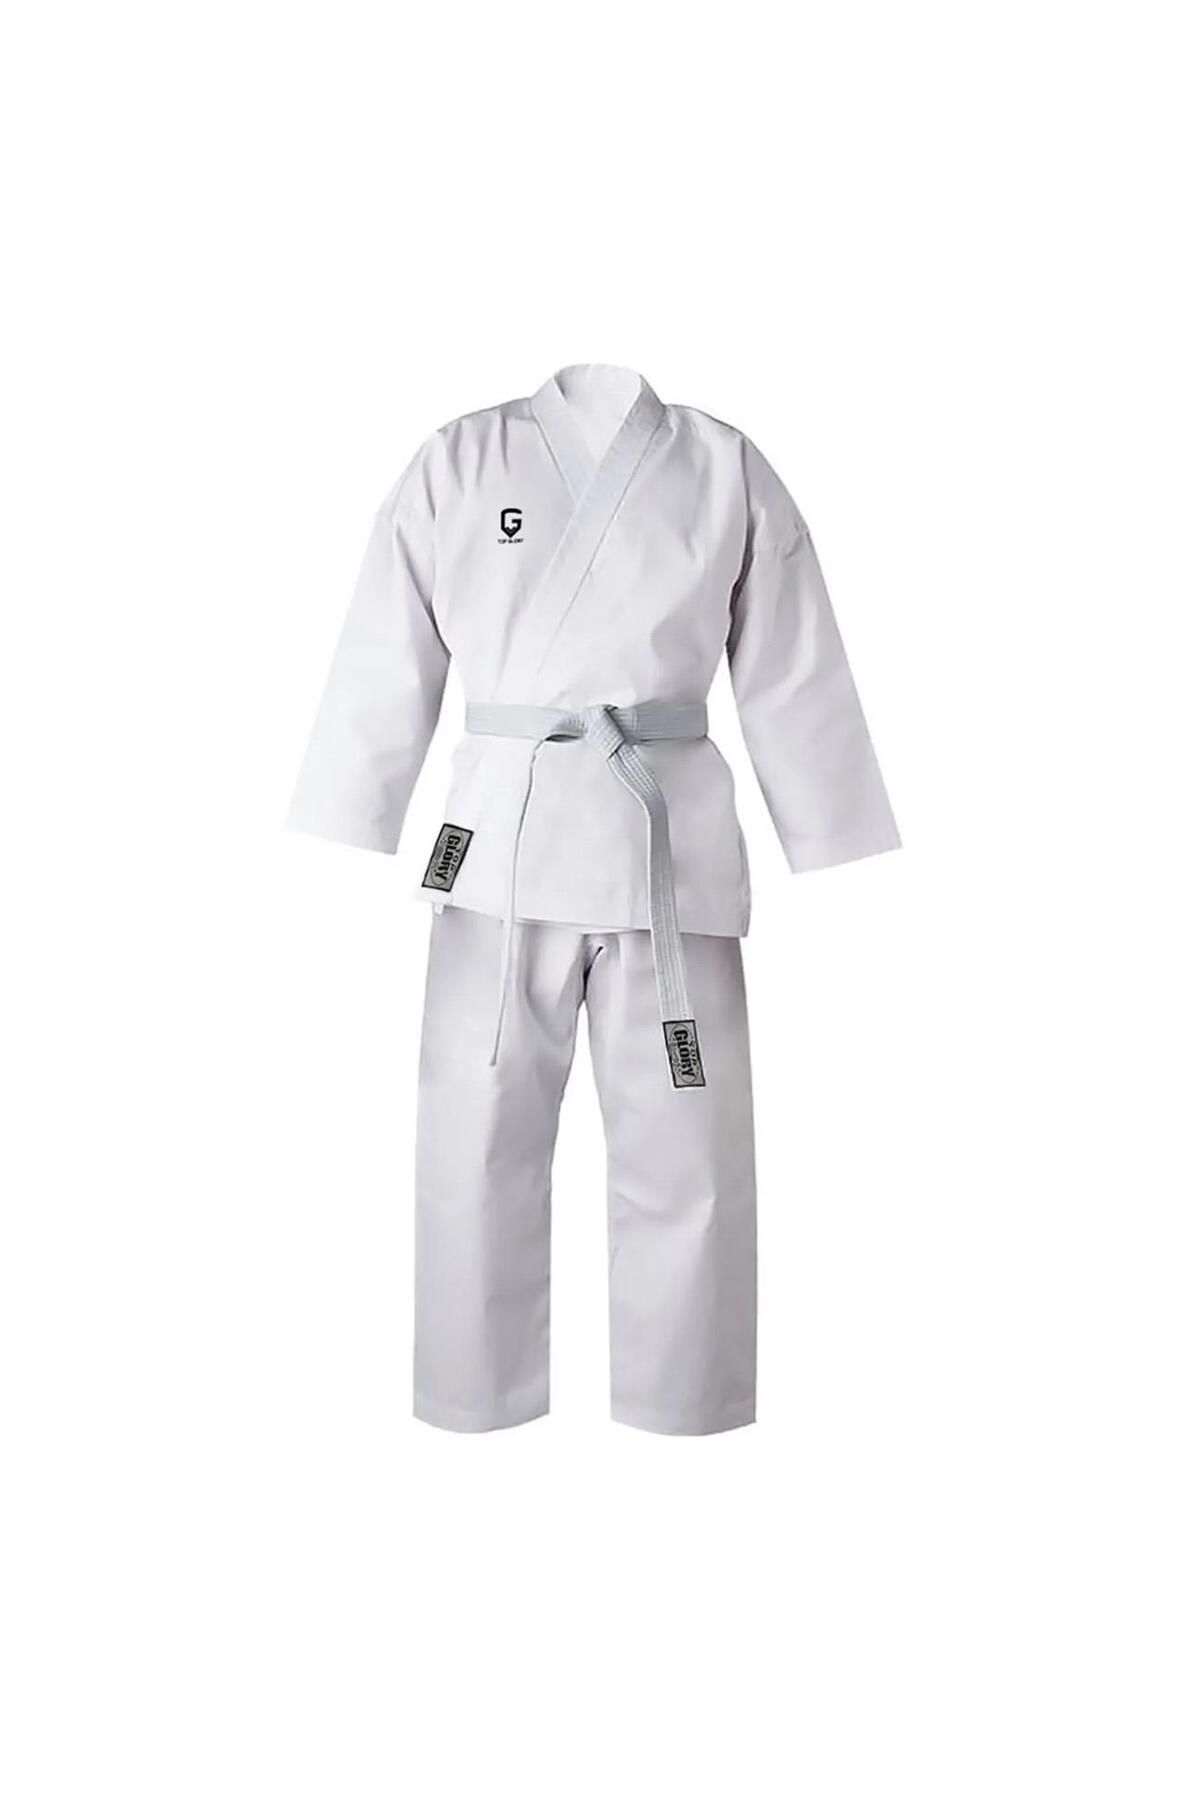 TOP GLORY Imlalpaka01 Karate Elbisesi Beyaz